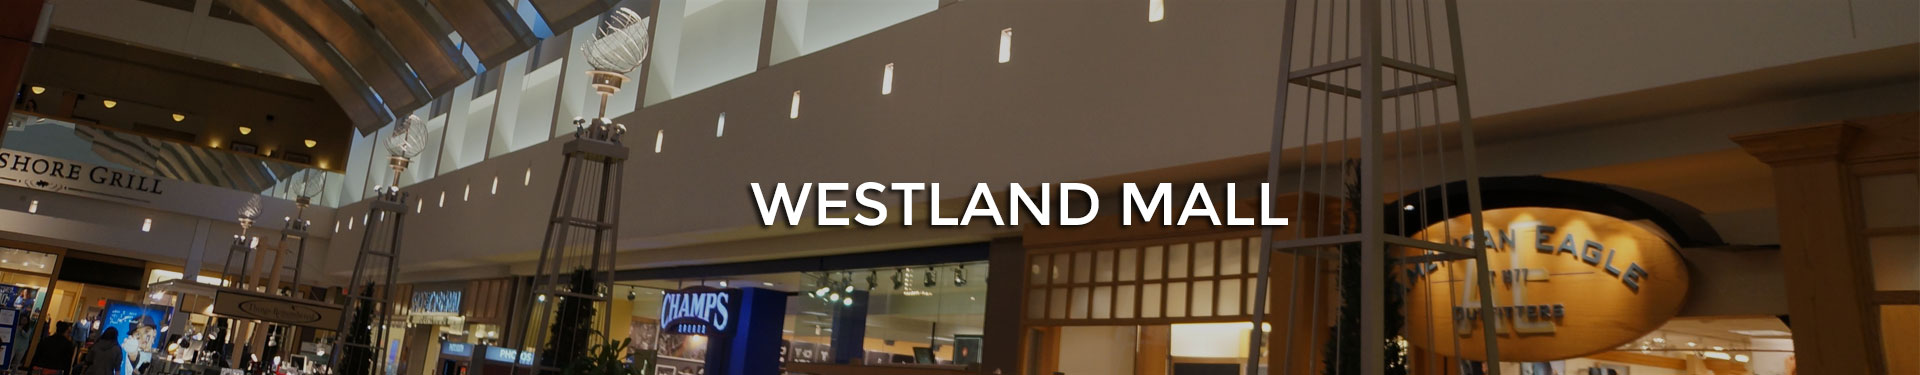 Westland Mall website